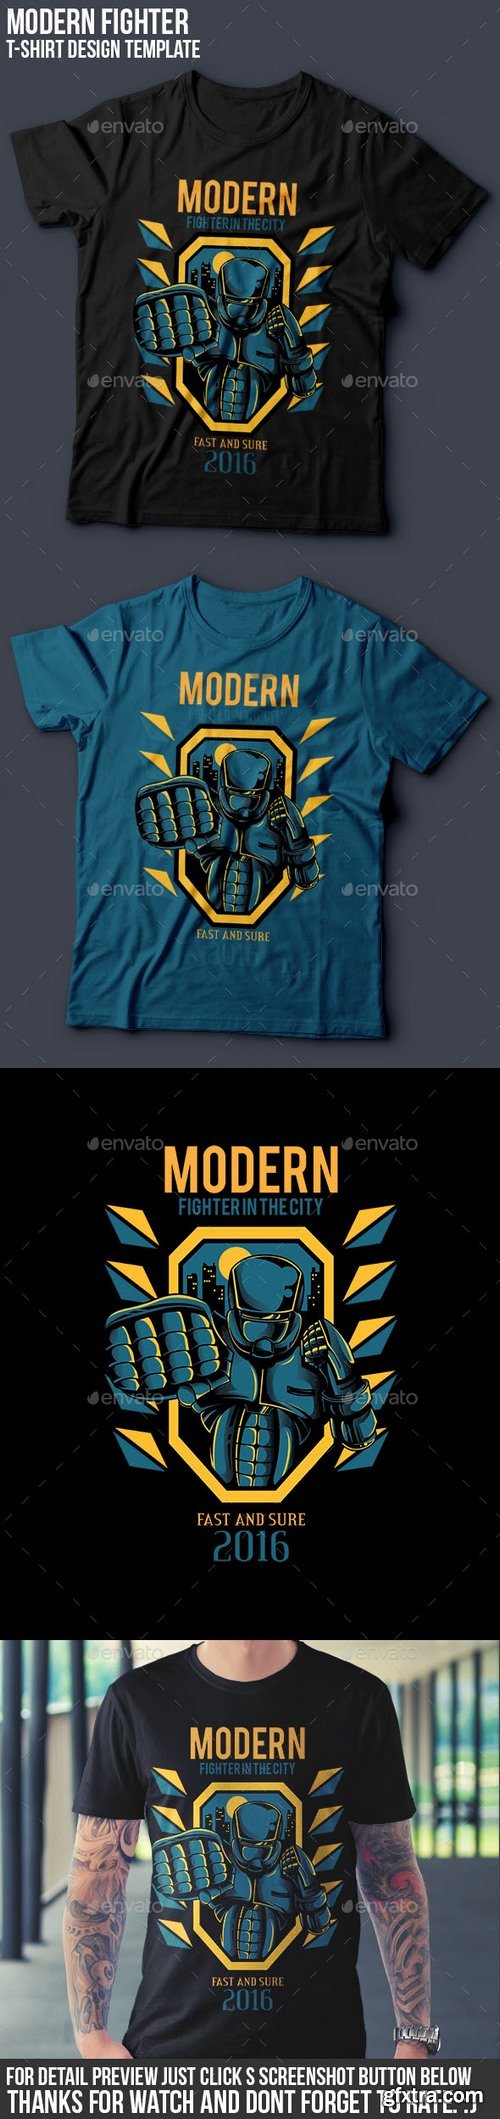 Graphicriver - Modern Fighter T-Shirt Design 14481077